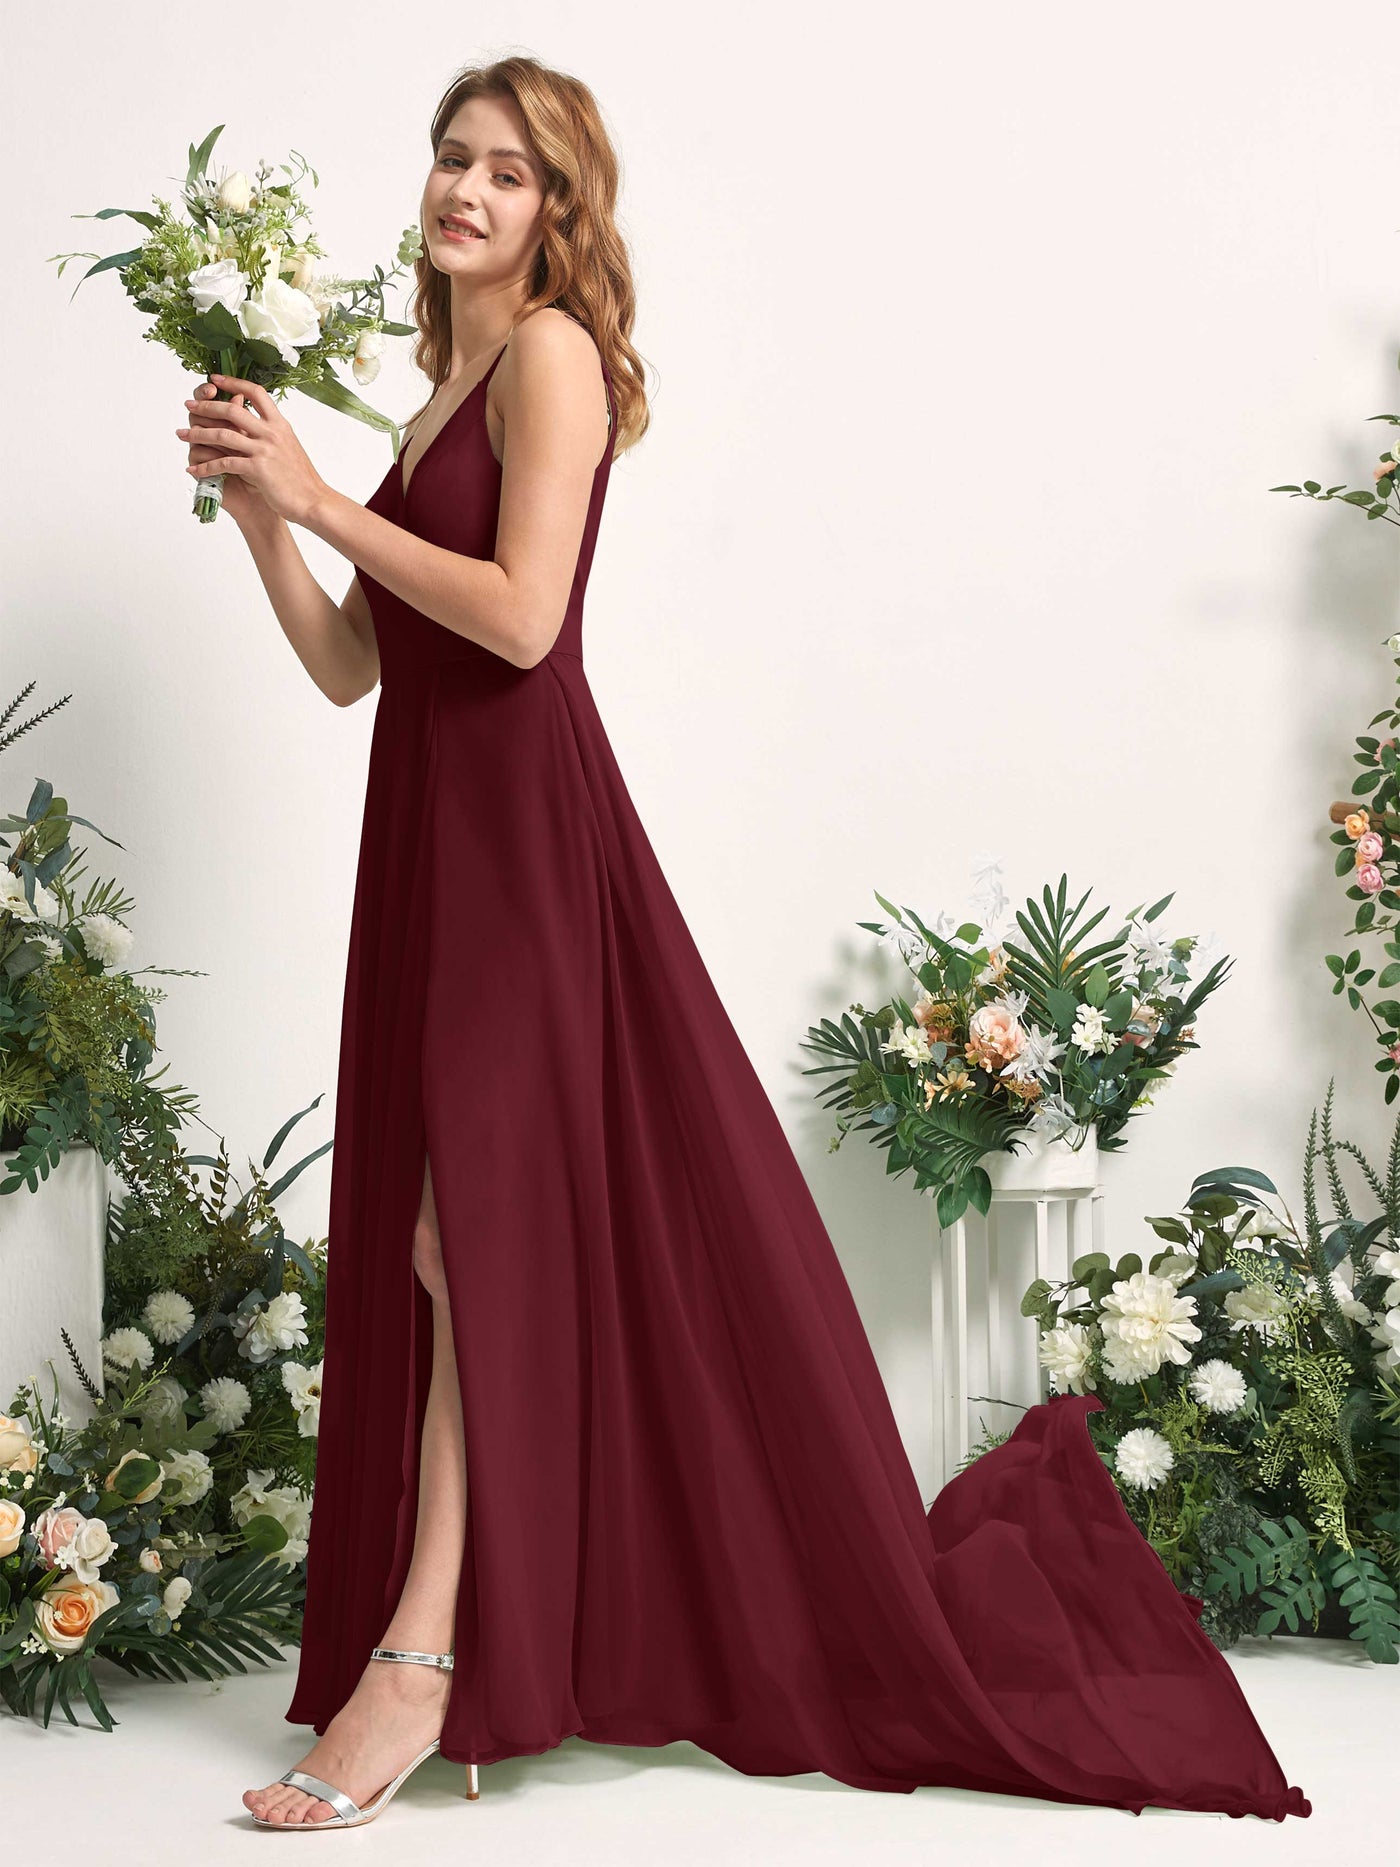 Bridesmaid Dress A-line Chiffon Spaghetti-straps Full Length Sleeveless Wedding Party Dress - Burgundy (81227712)#color_burgundy